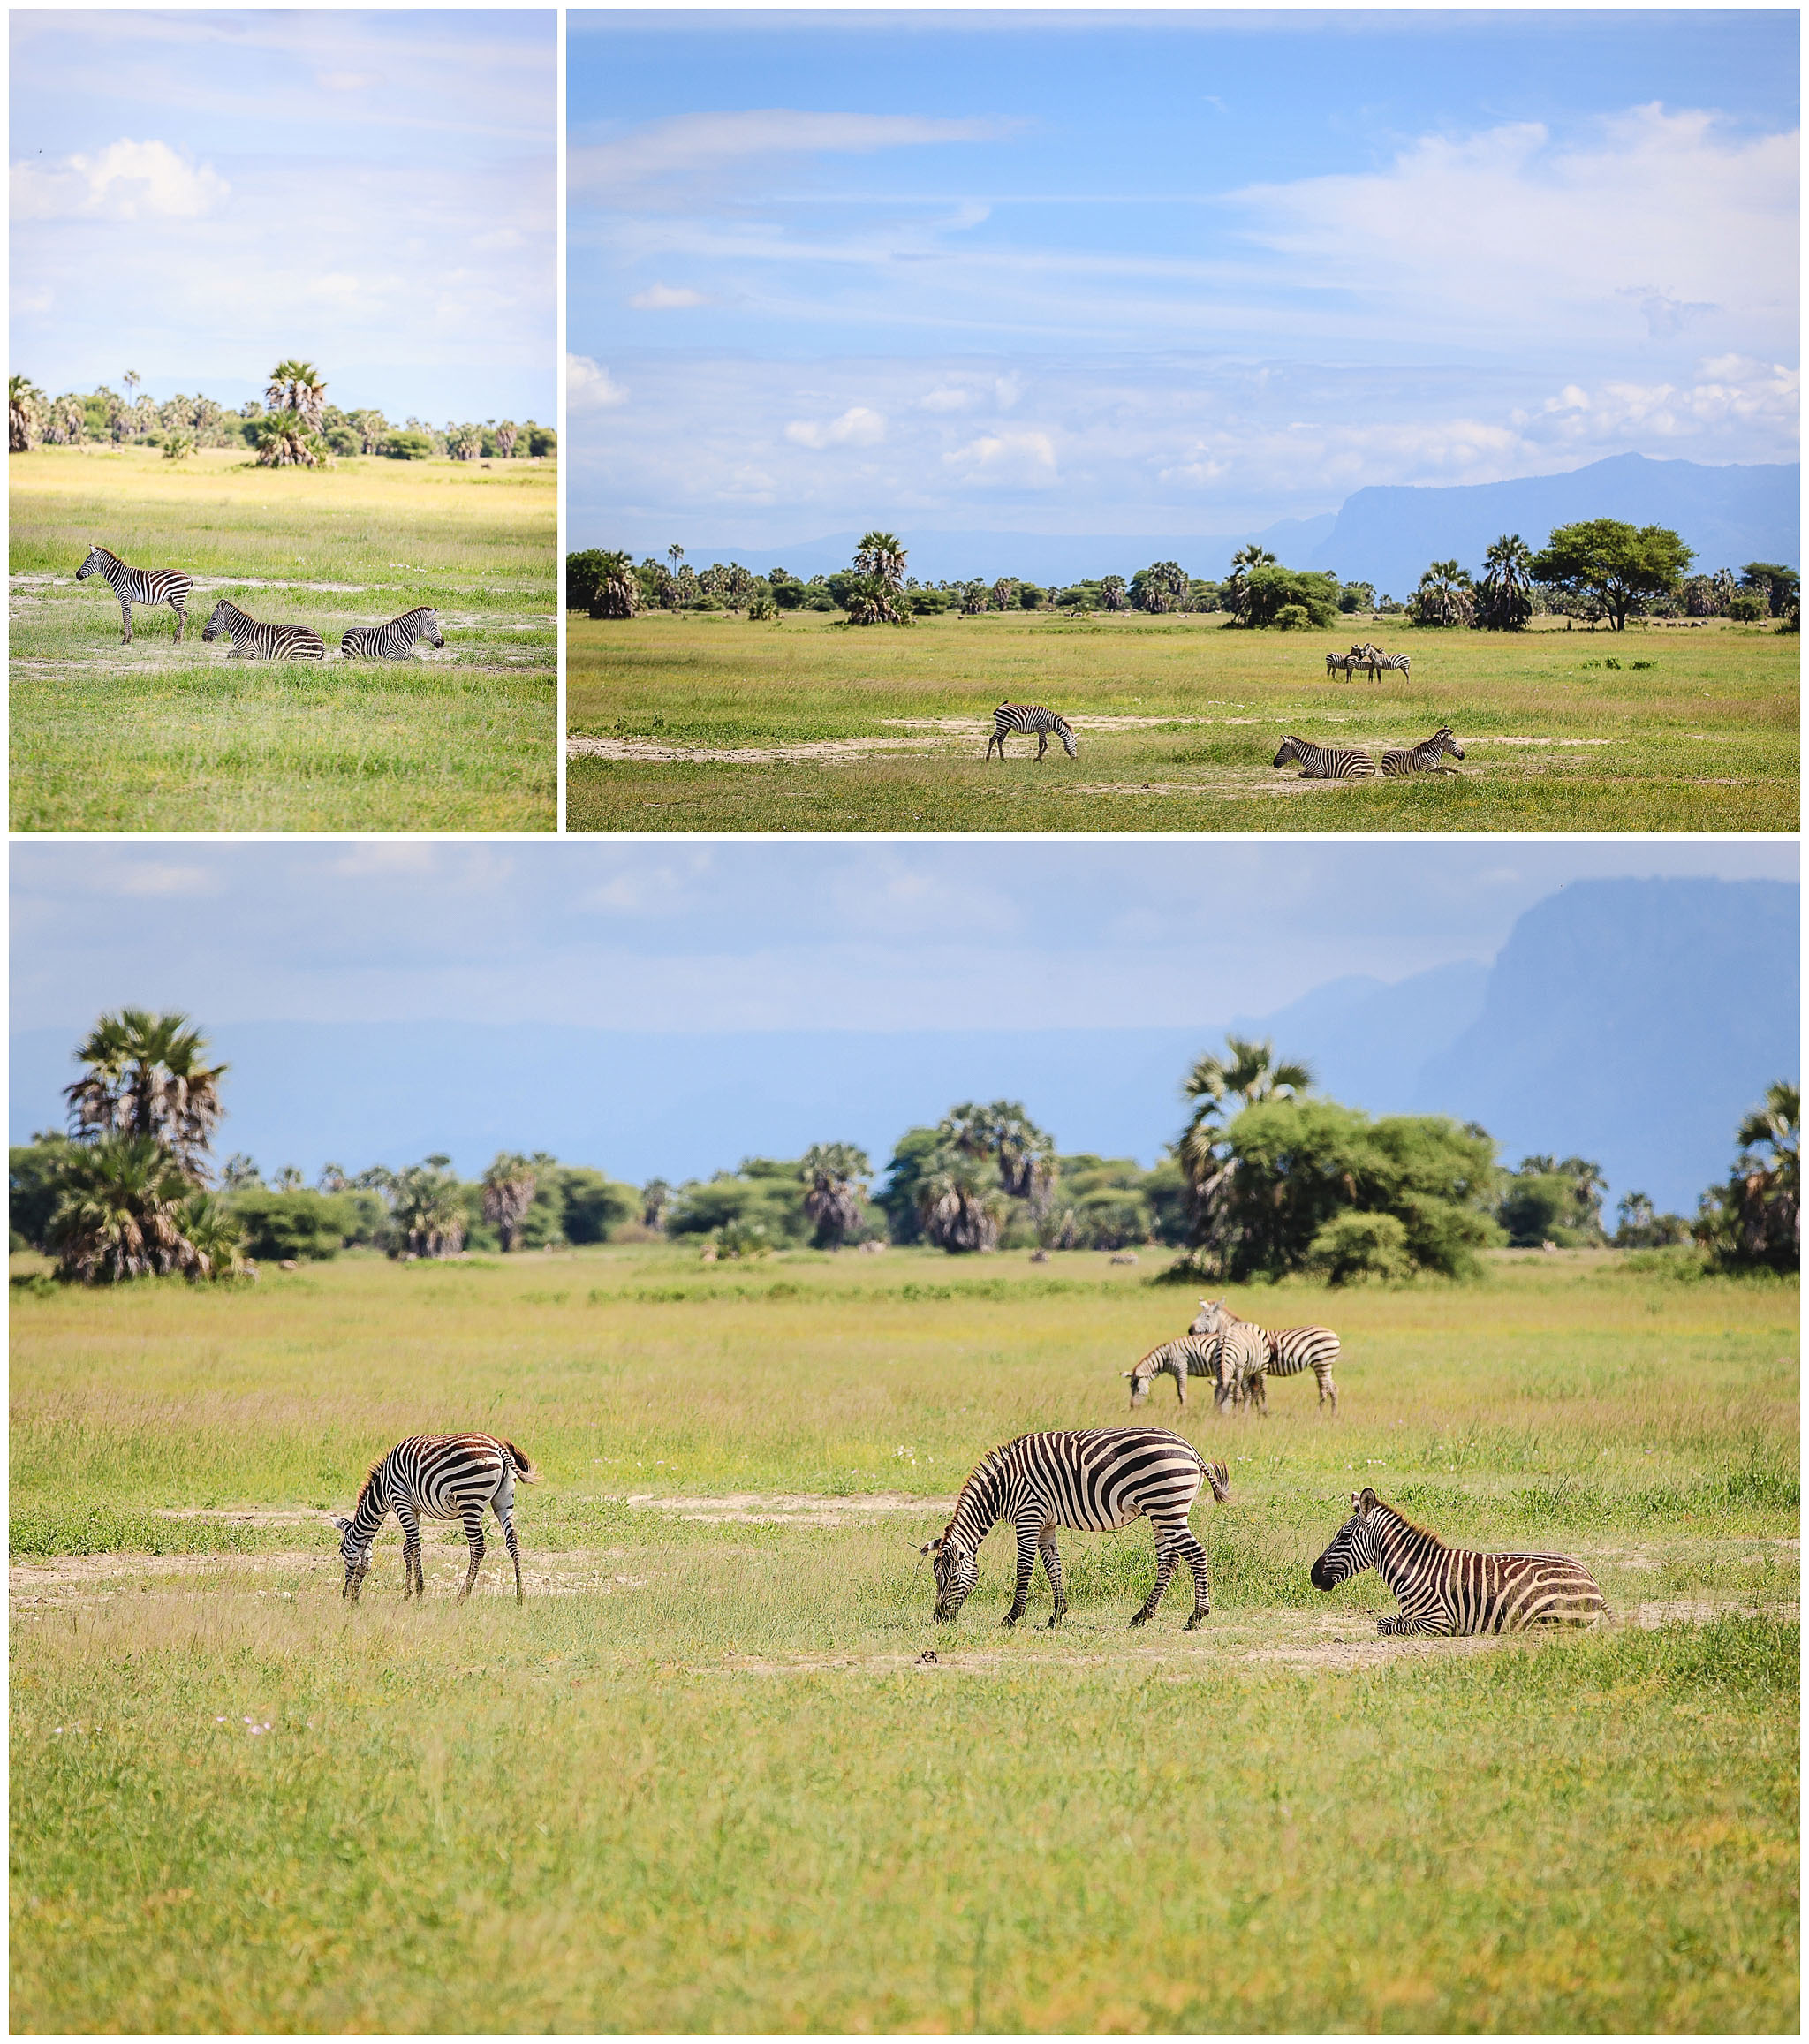 Zebras resting in Tarangire National Park, Tanzania, Africa